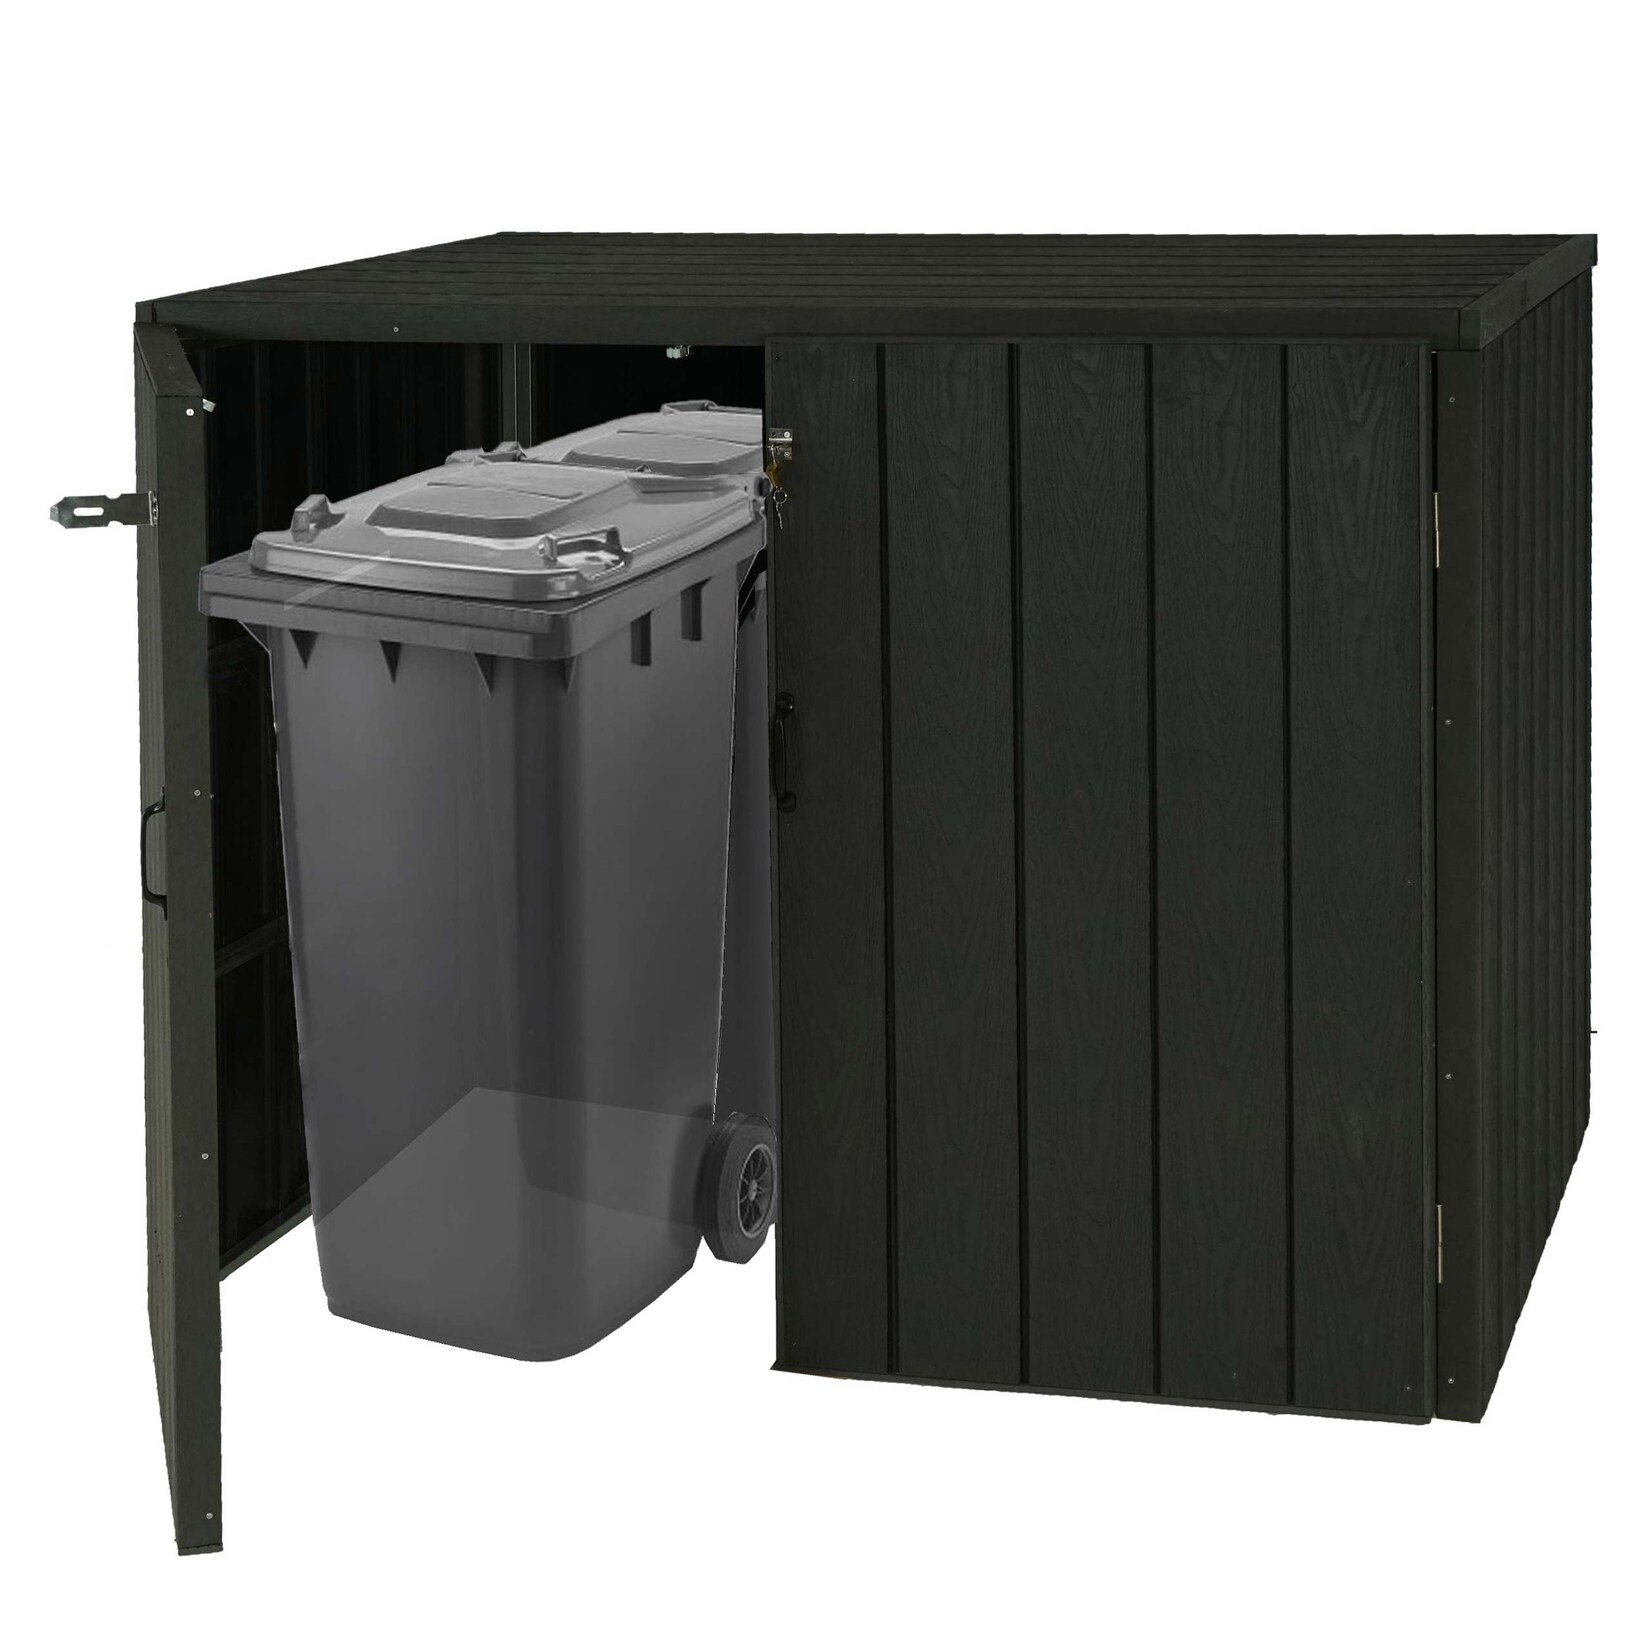 XL 2er-/4er-WPC-Mülltonnenverkleidung MCW-J28, Premium Mülltonnenbox, Metall Holzoptik, erweiterbar ~ anthrazit